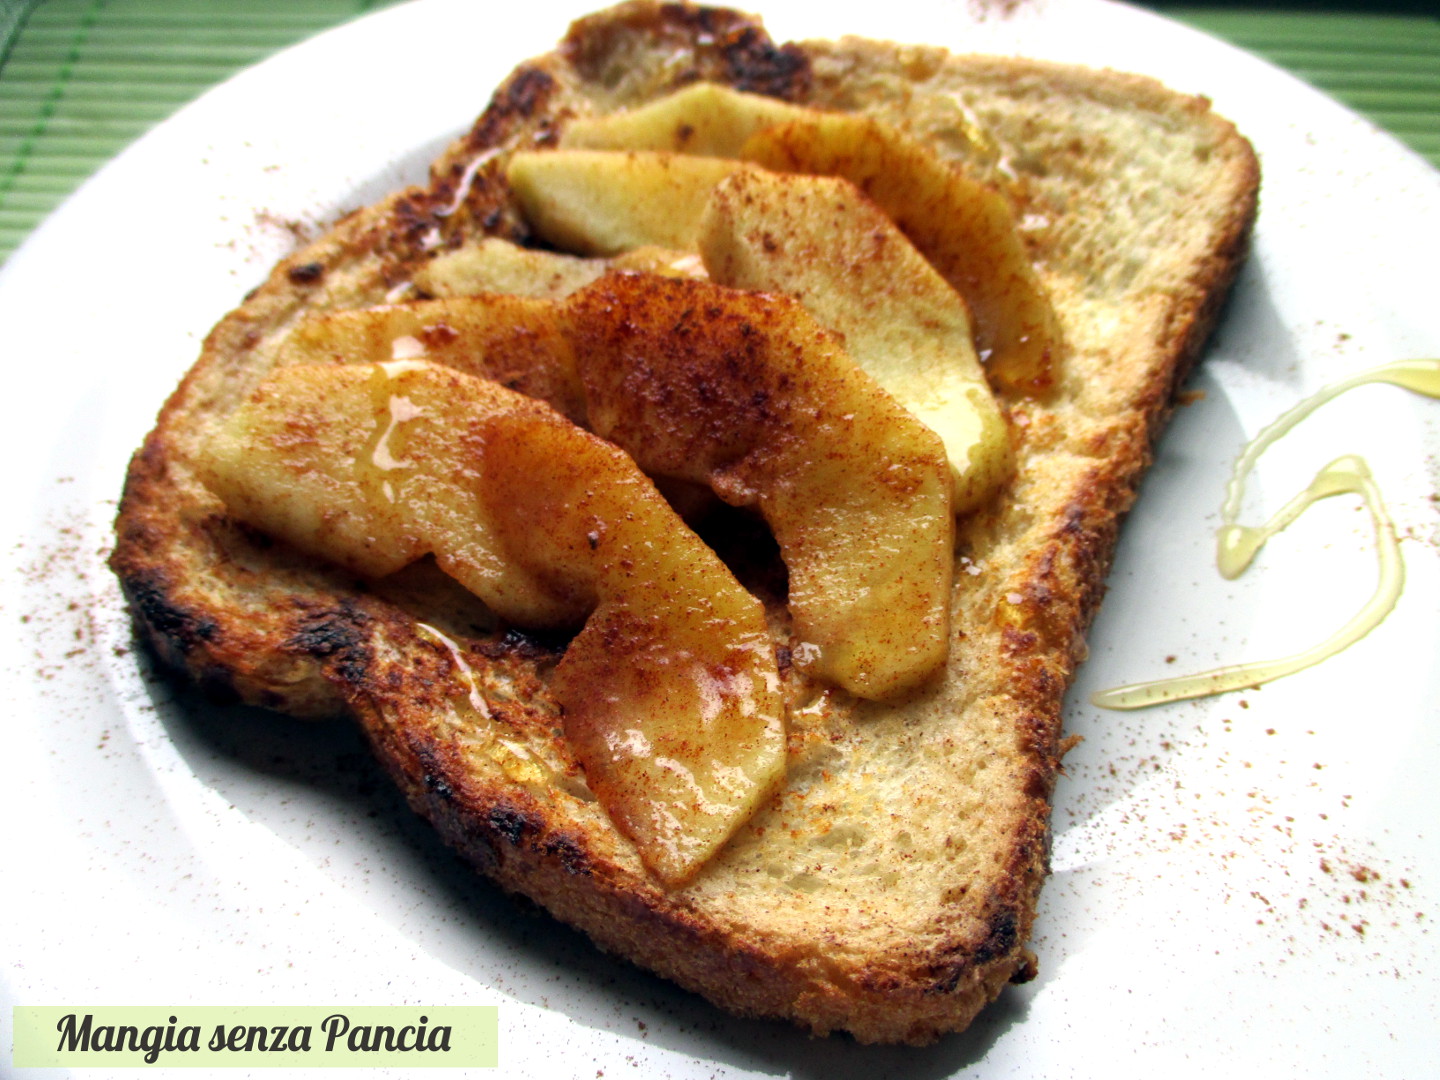 French toast con mele e cannella, senza burro o olio